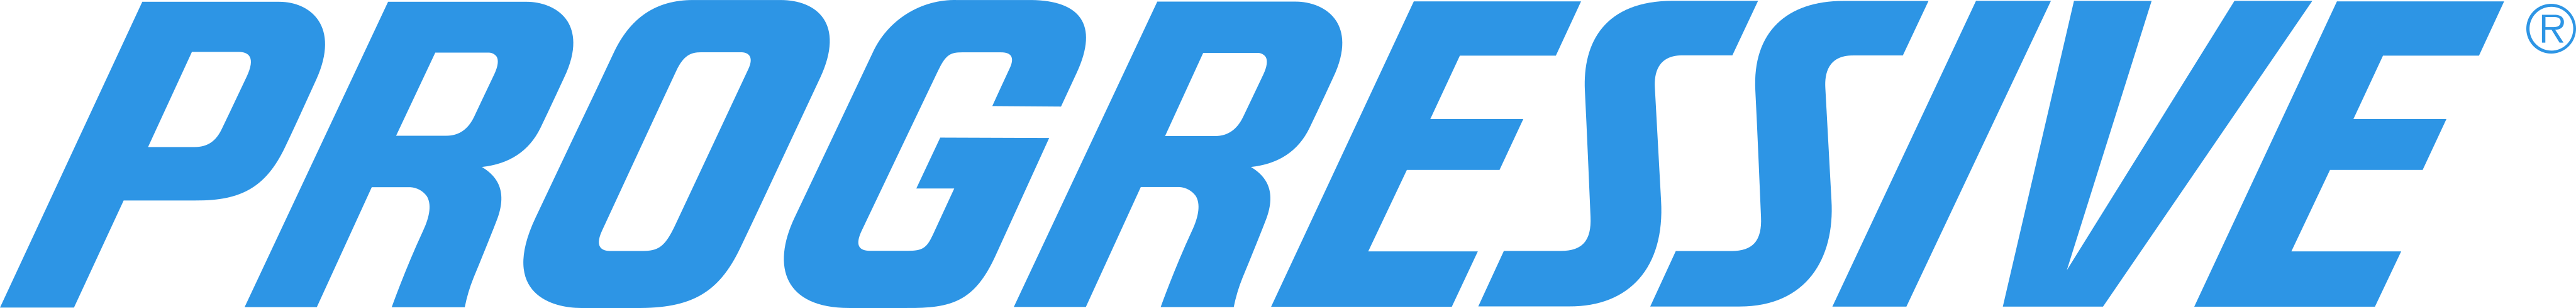 progressive logo - Progressive Logo